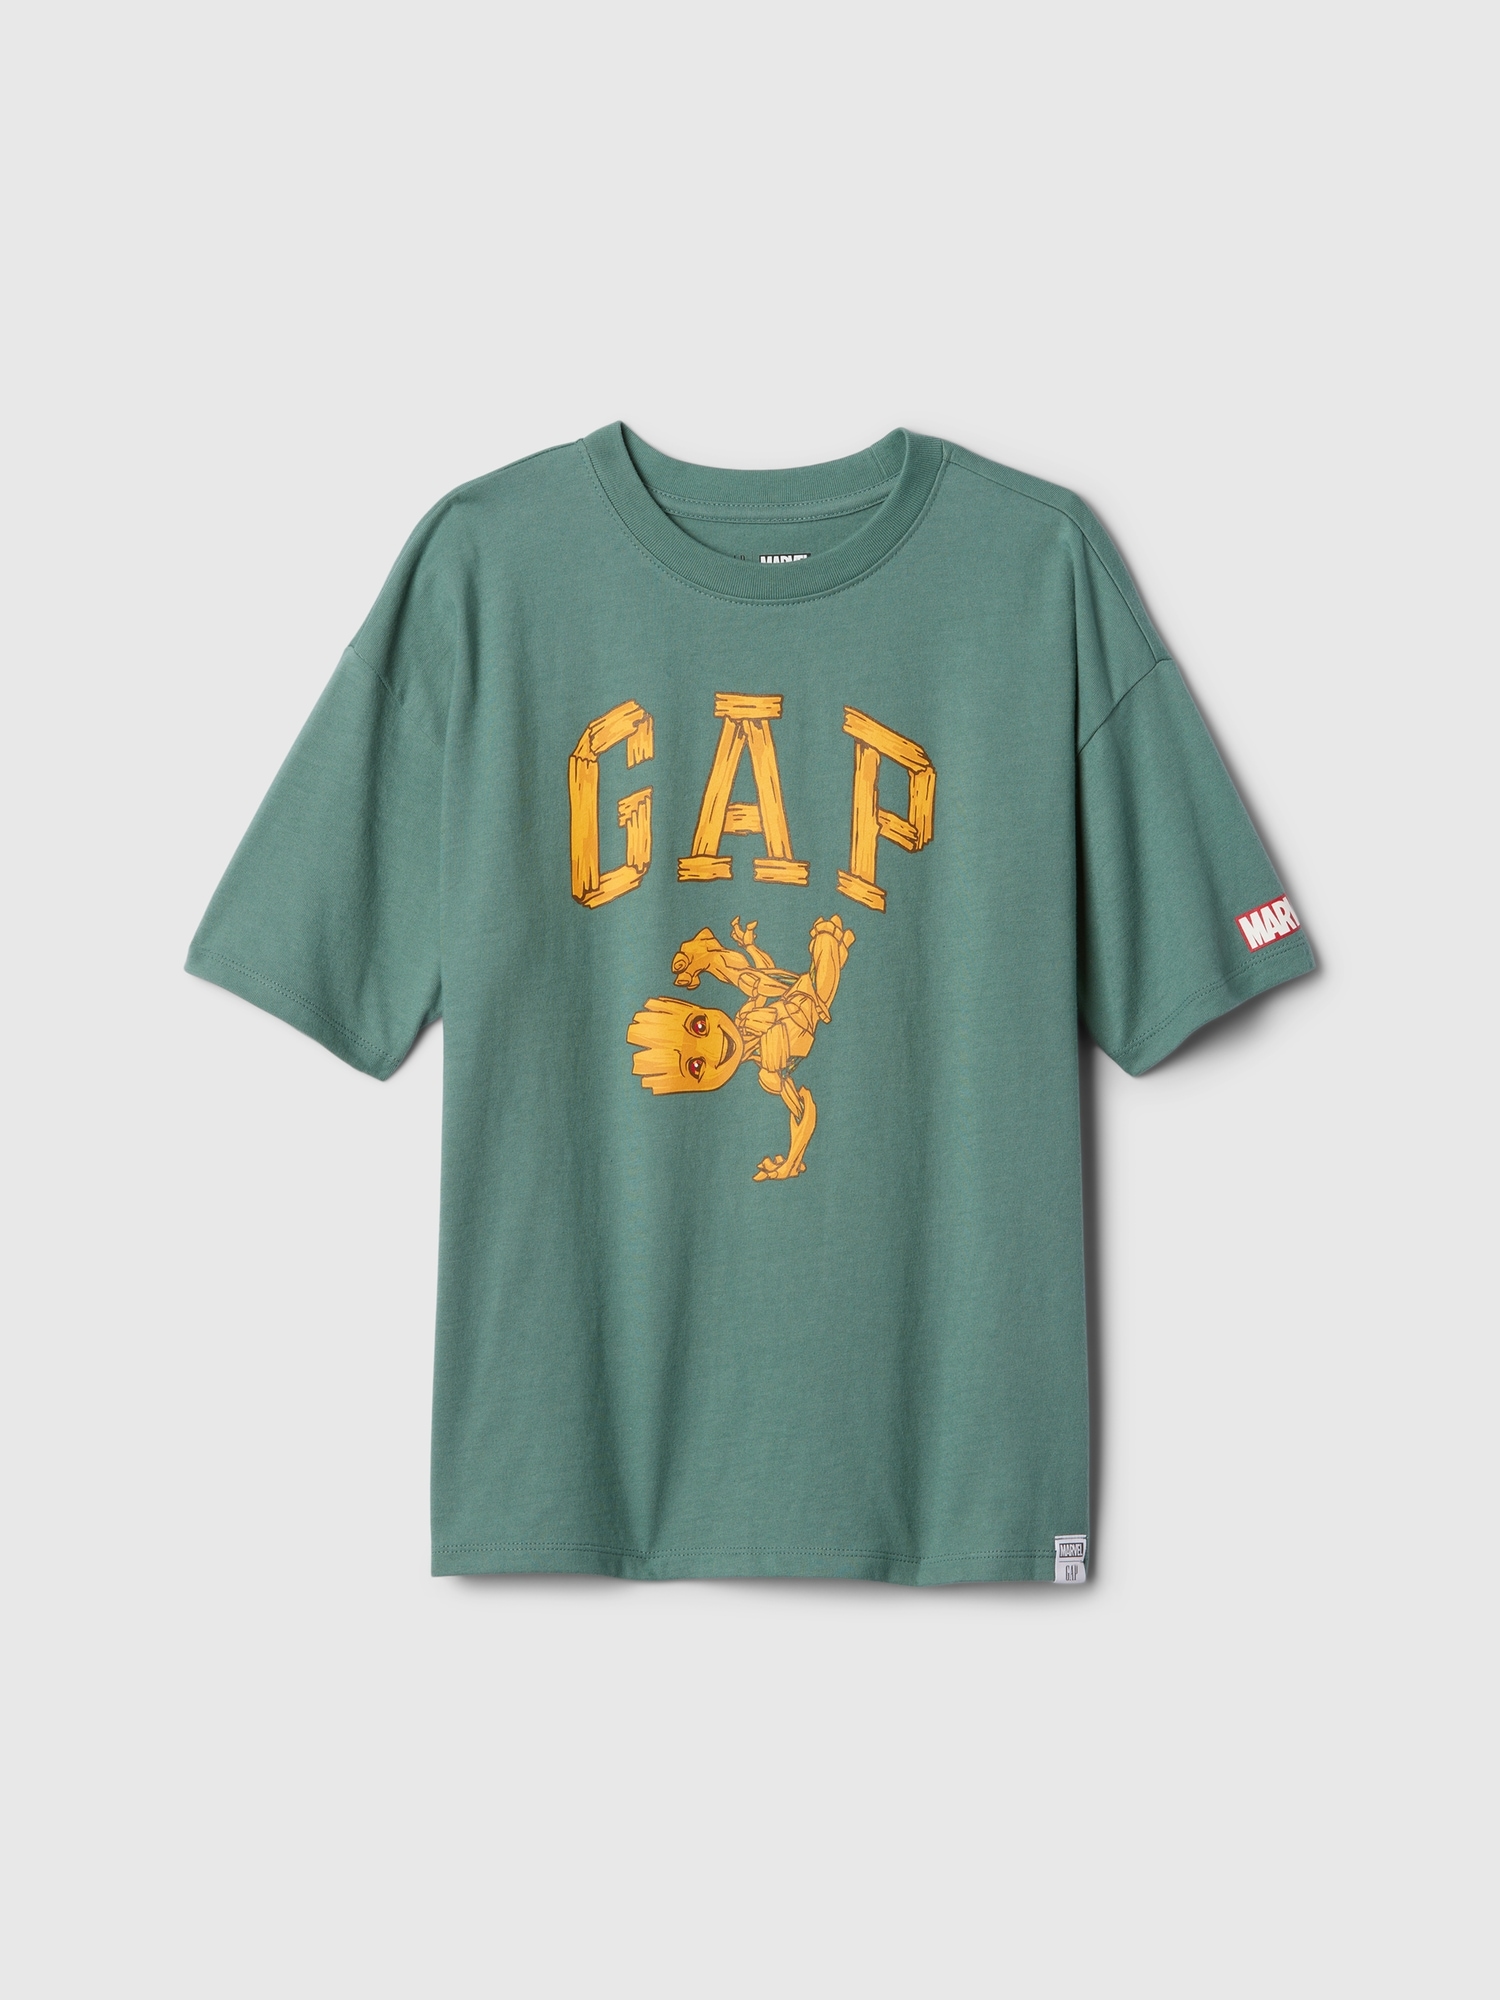 GapKids | Marvel Logo Graphic T-Shirt